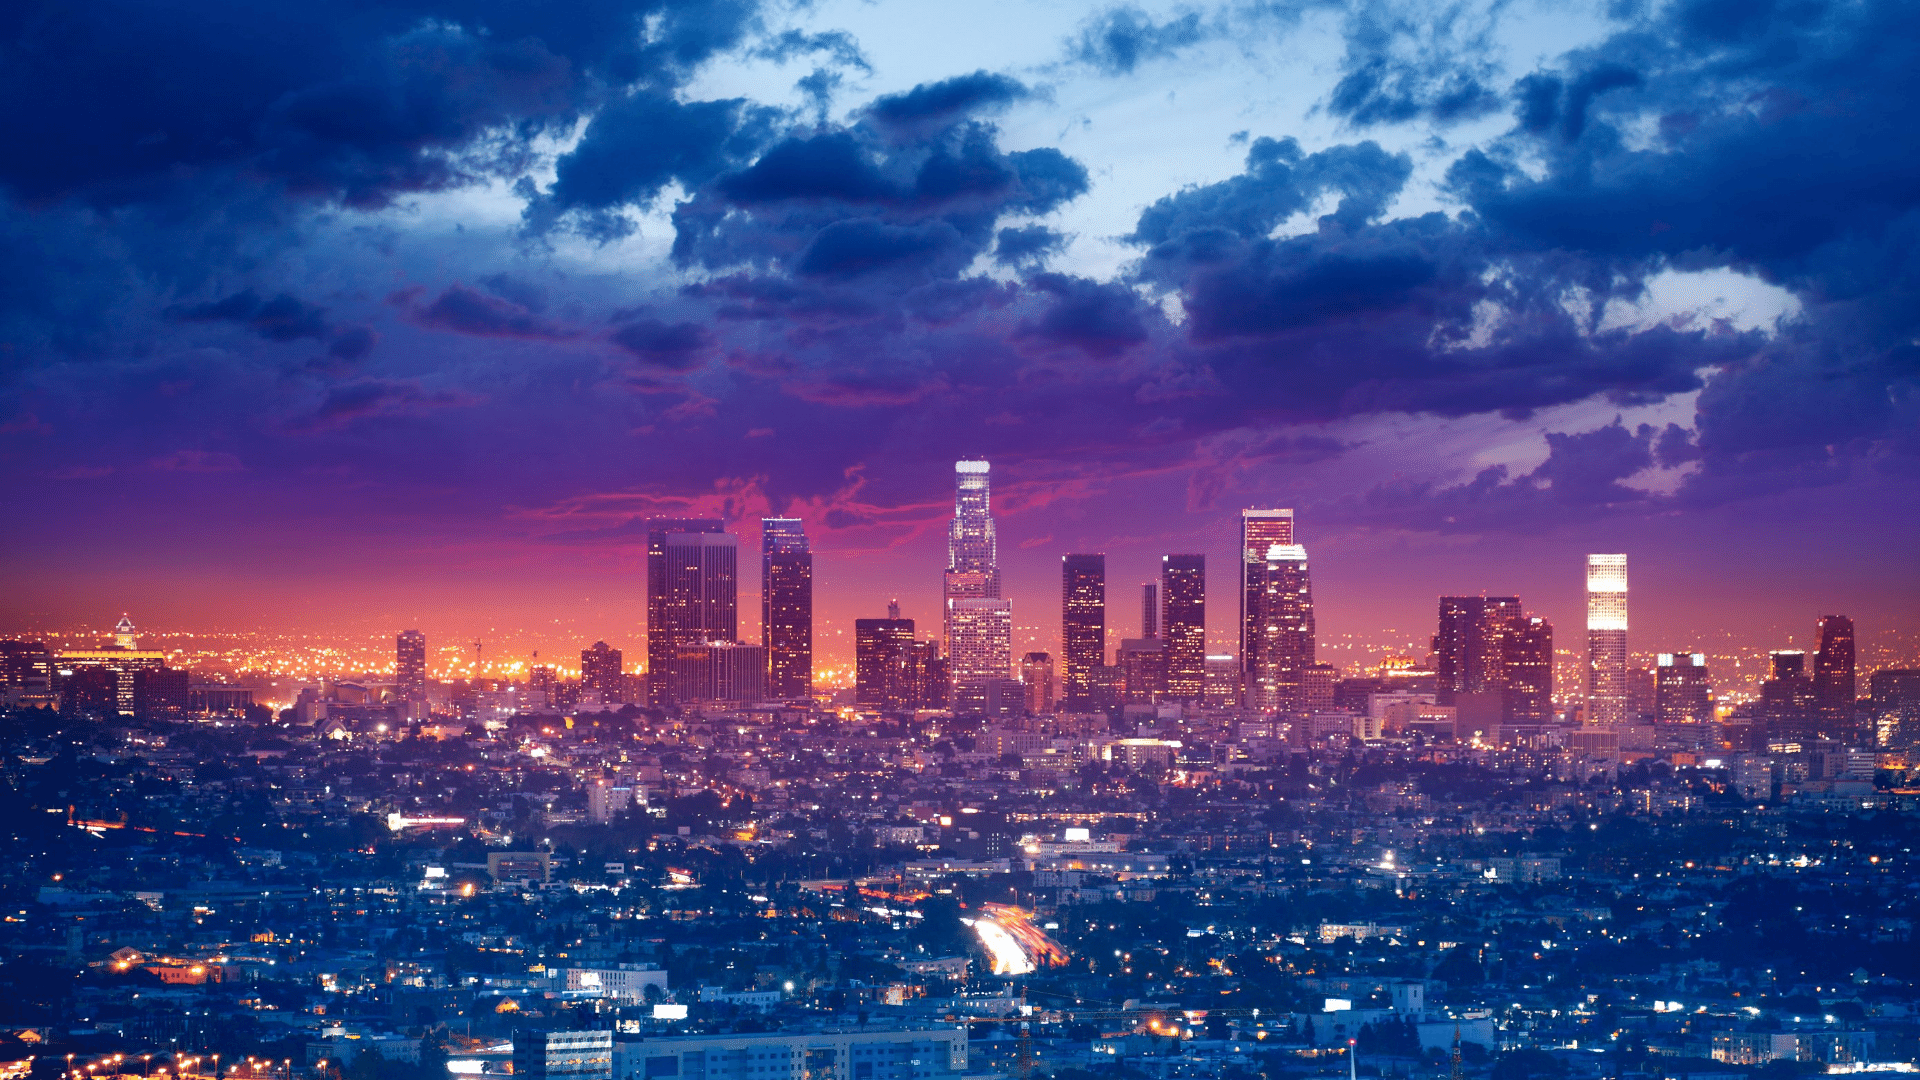 City of Los Angeles Sunday, Los Angeles! #SnapshotSunday